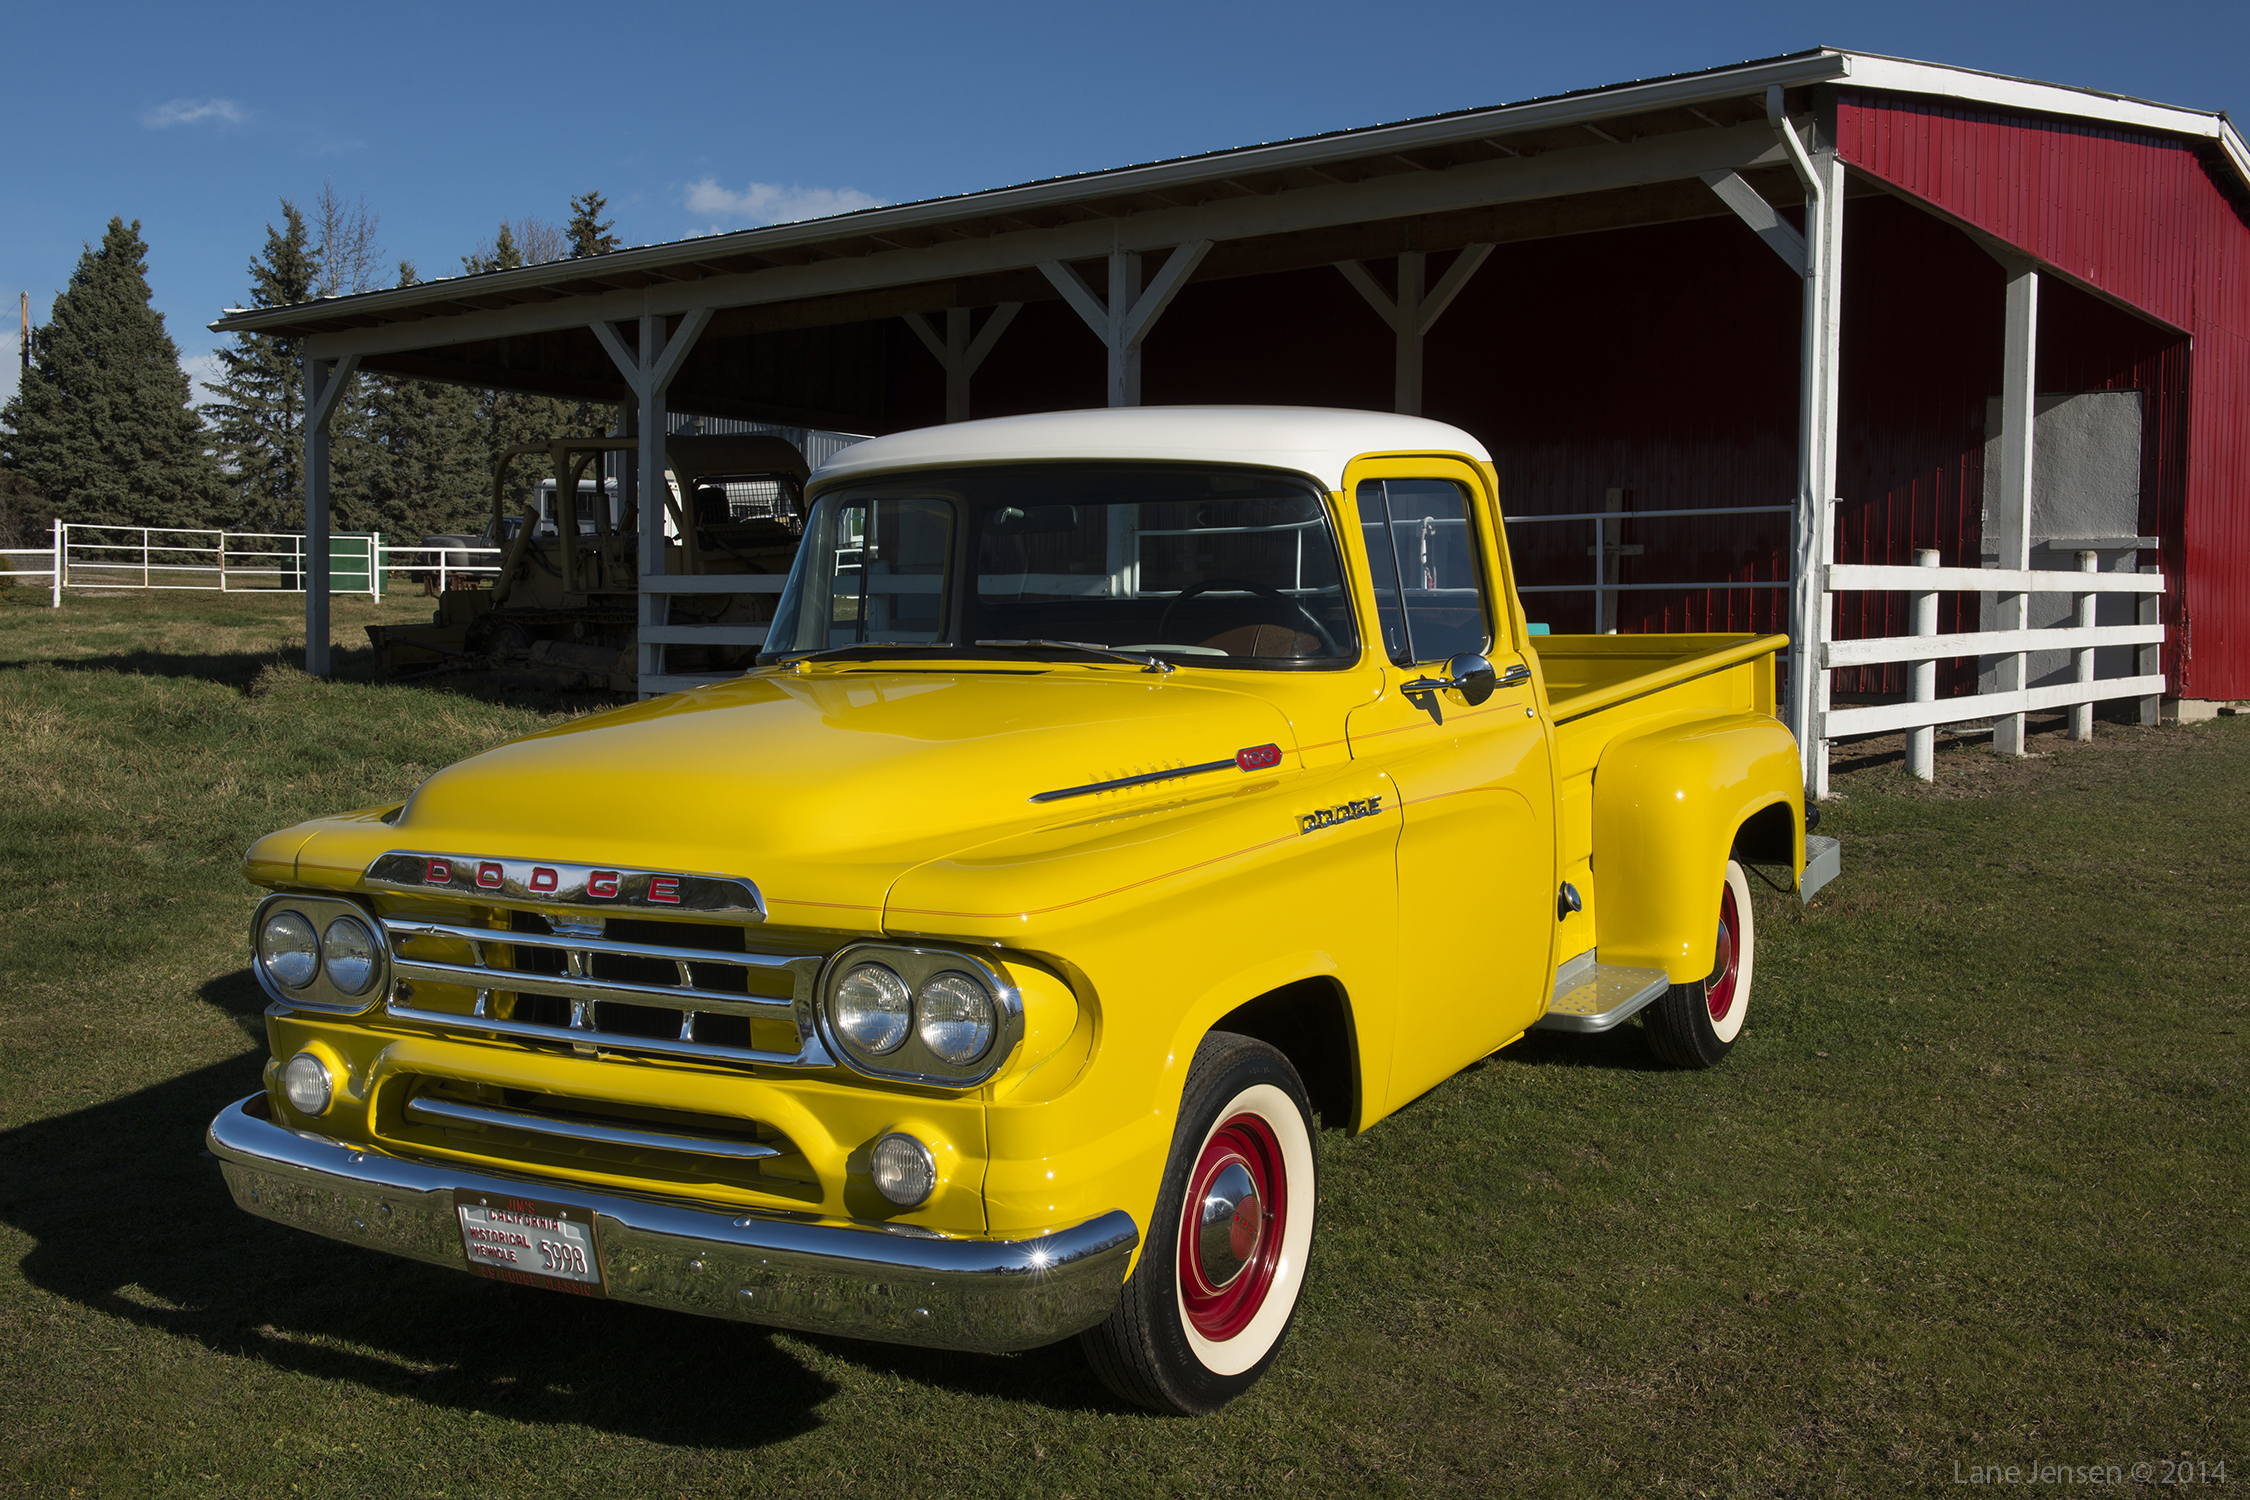 1959 Dodge Truck 16 x 24 website.jpg